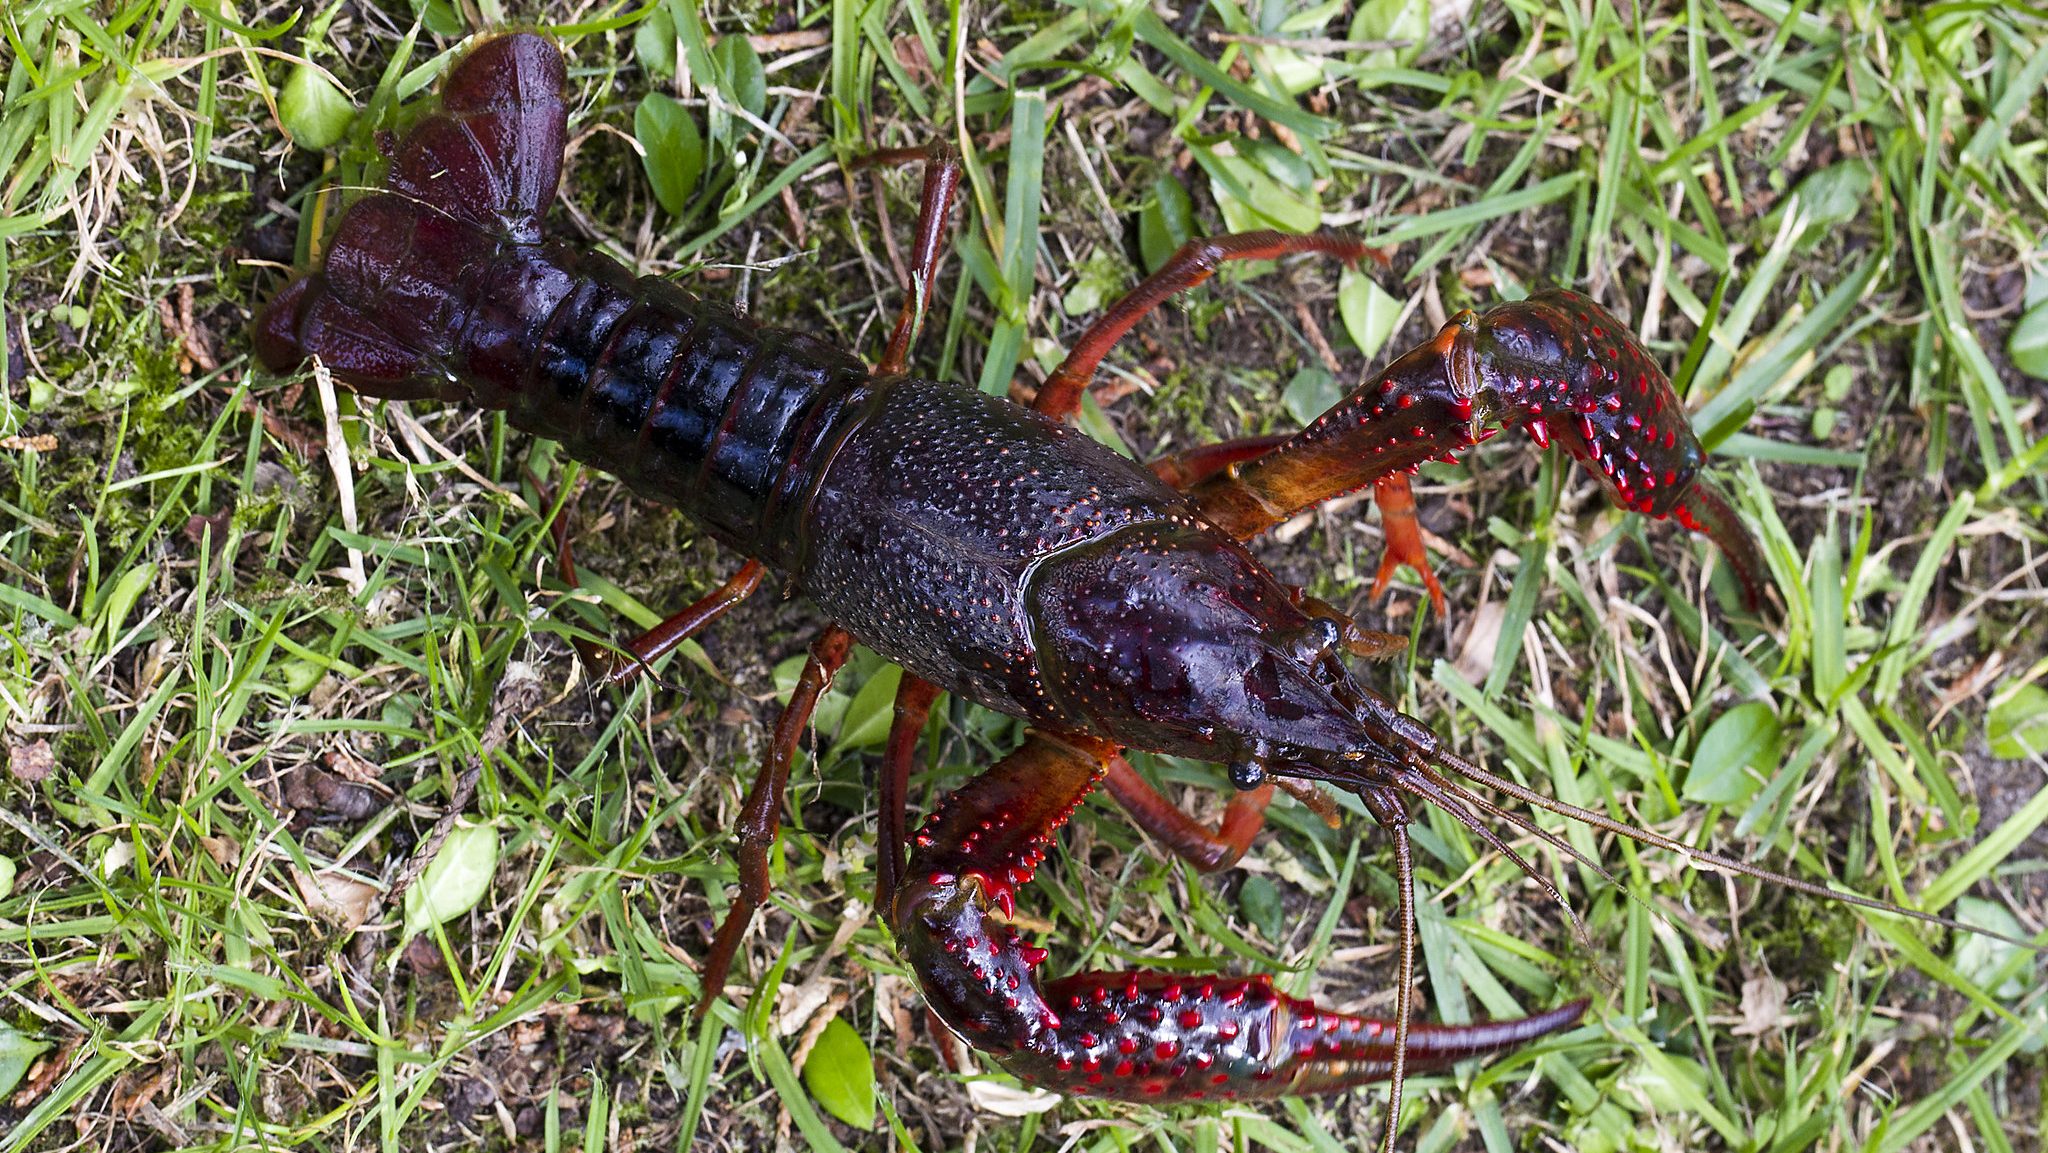 red crayfish on grass